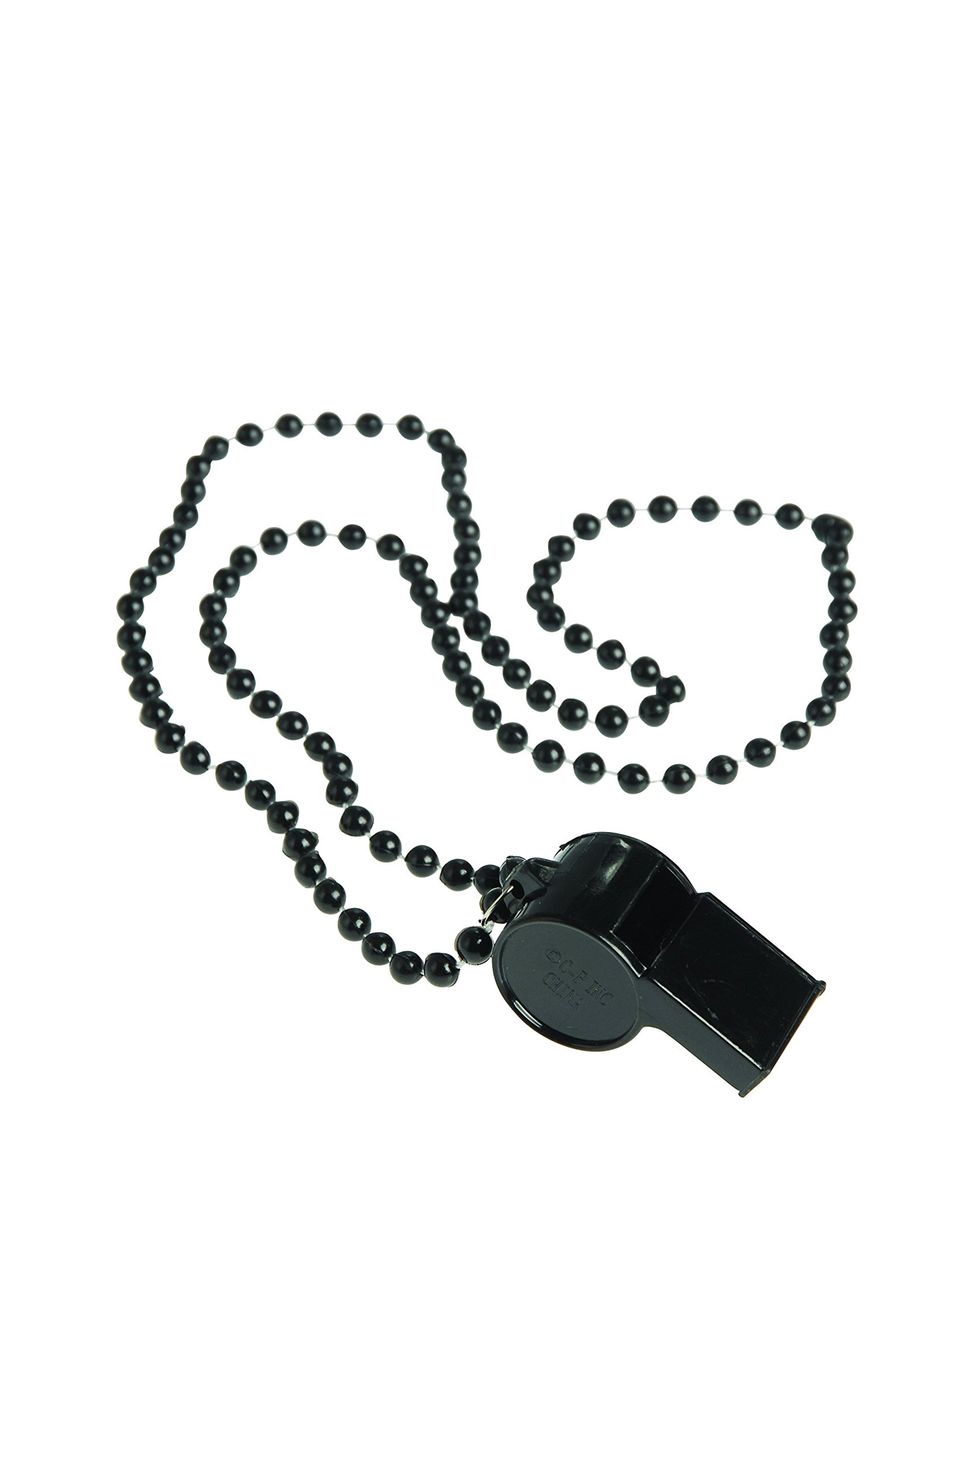 Dozen Beaded Necklaces With Whistles